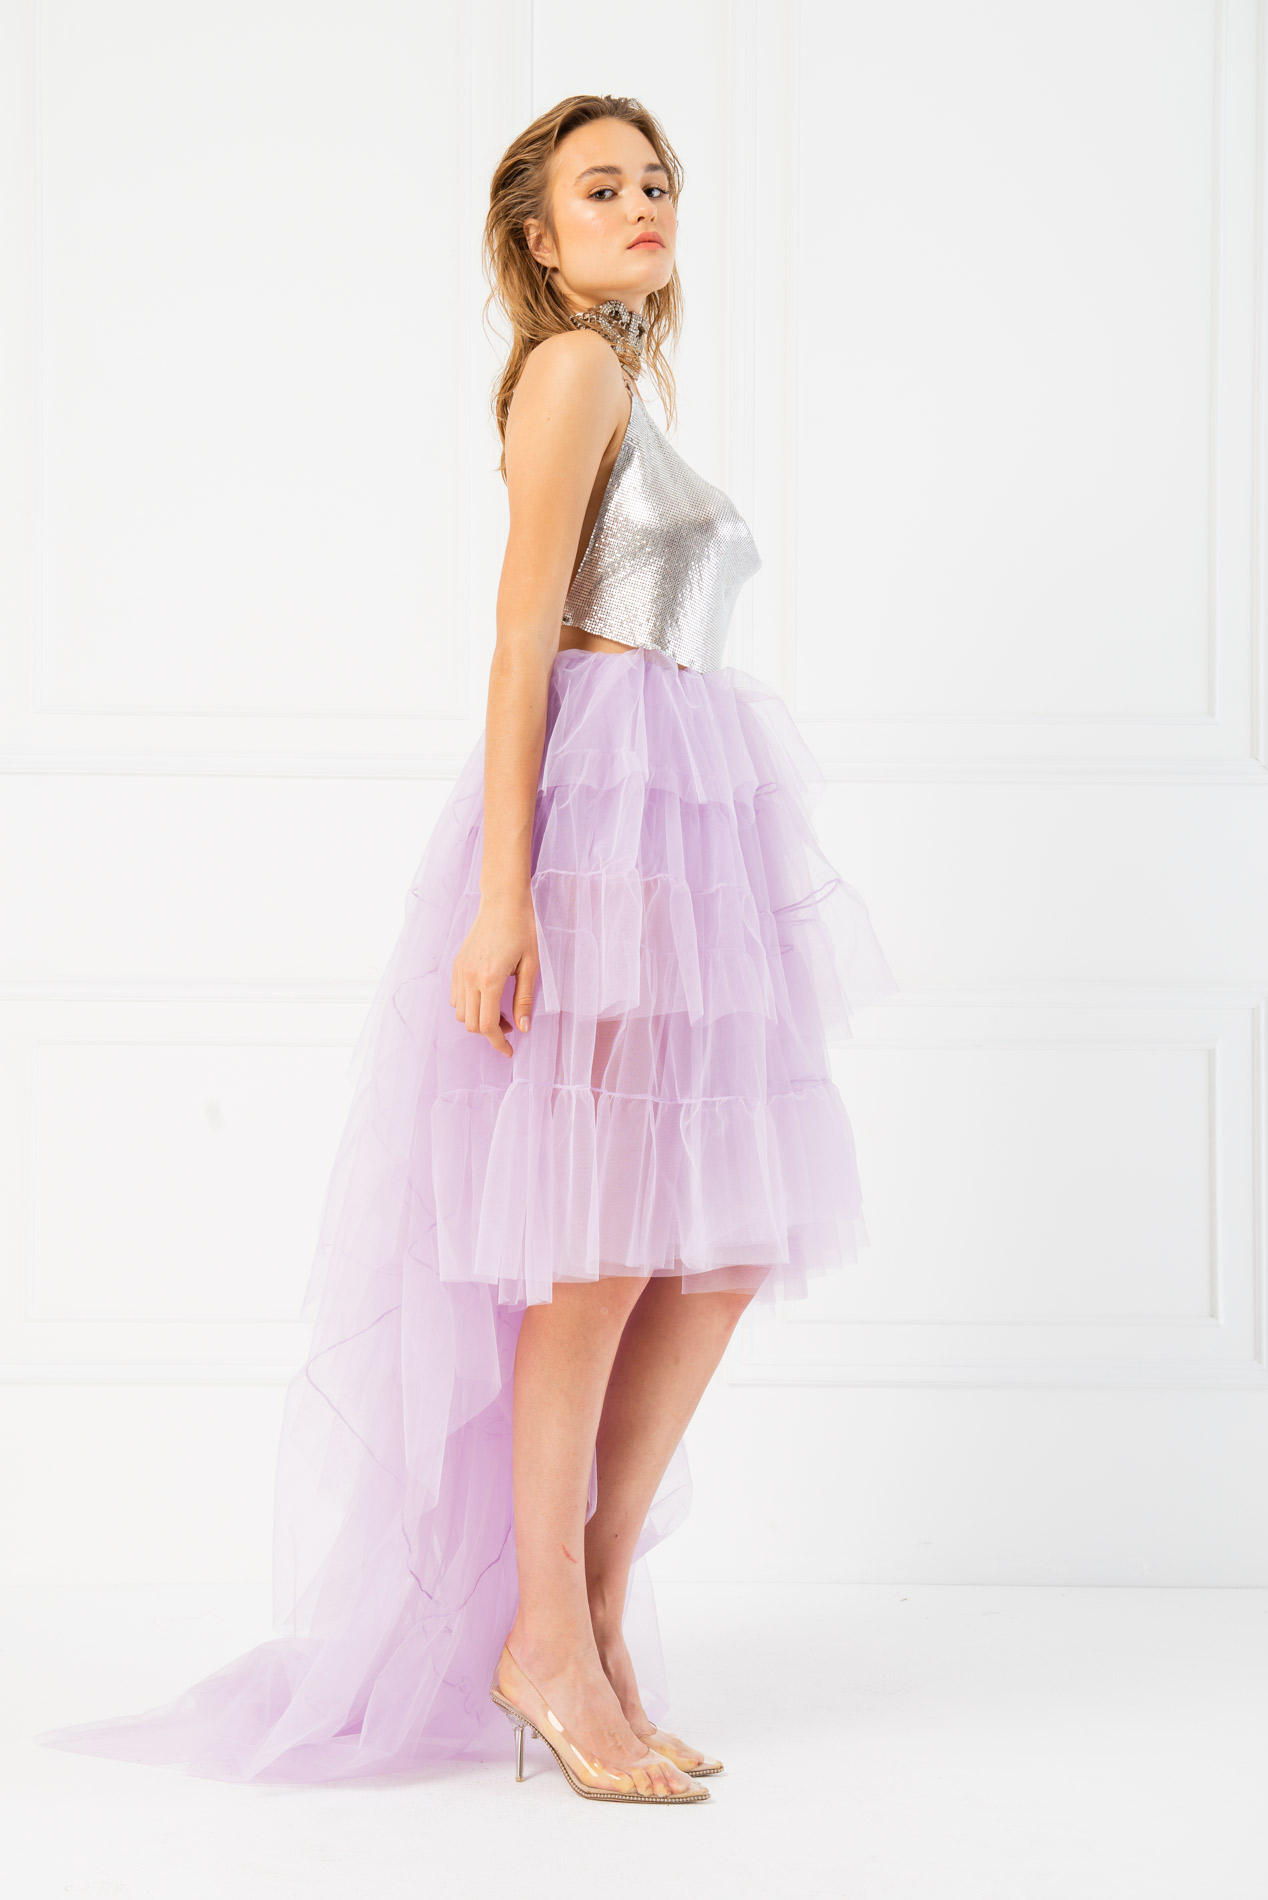 Tulle Detail Strapless Light Purle Sheer Mini Dress